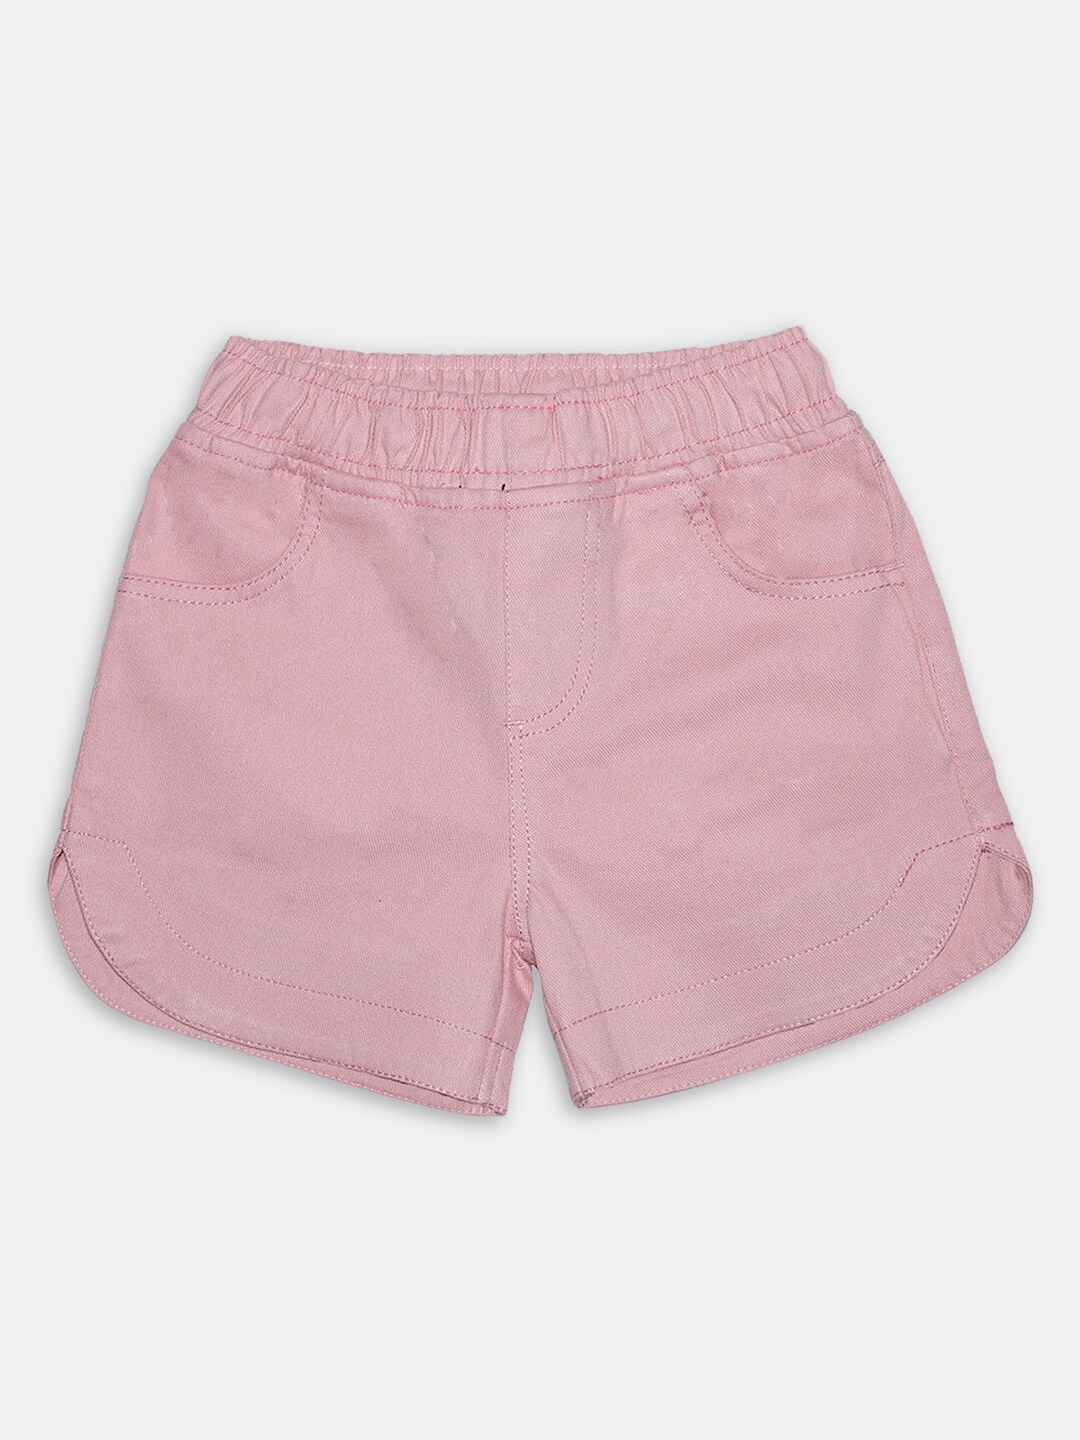 Buy Hopscotch Girls Pink Shorts - Shorts for Girls 19317096 | Myntra